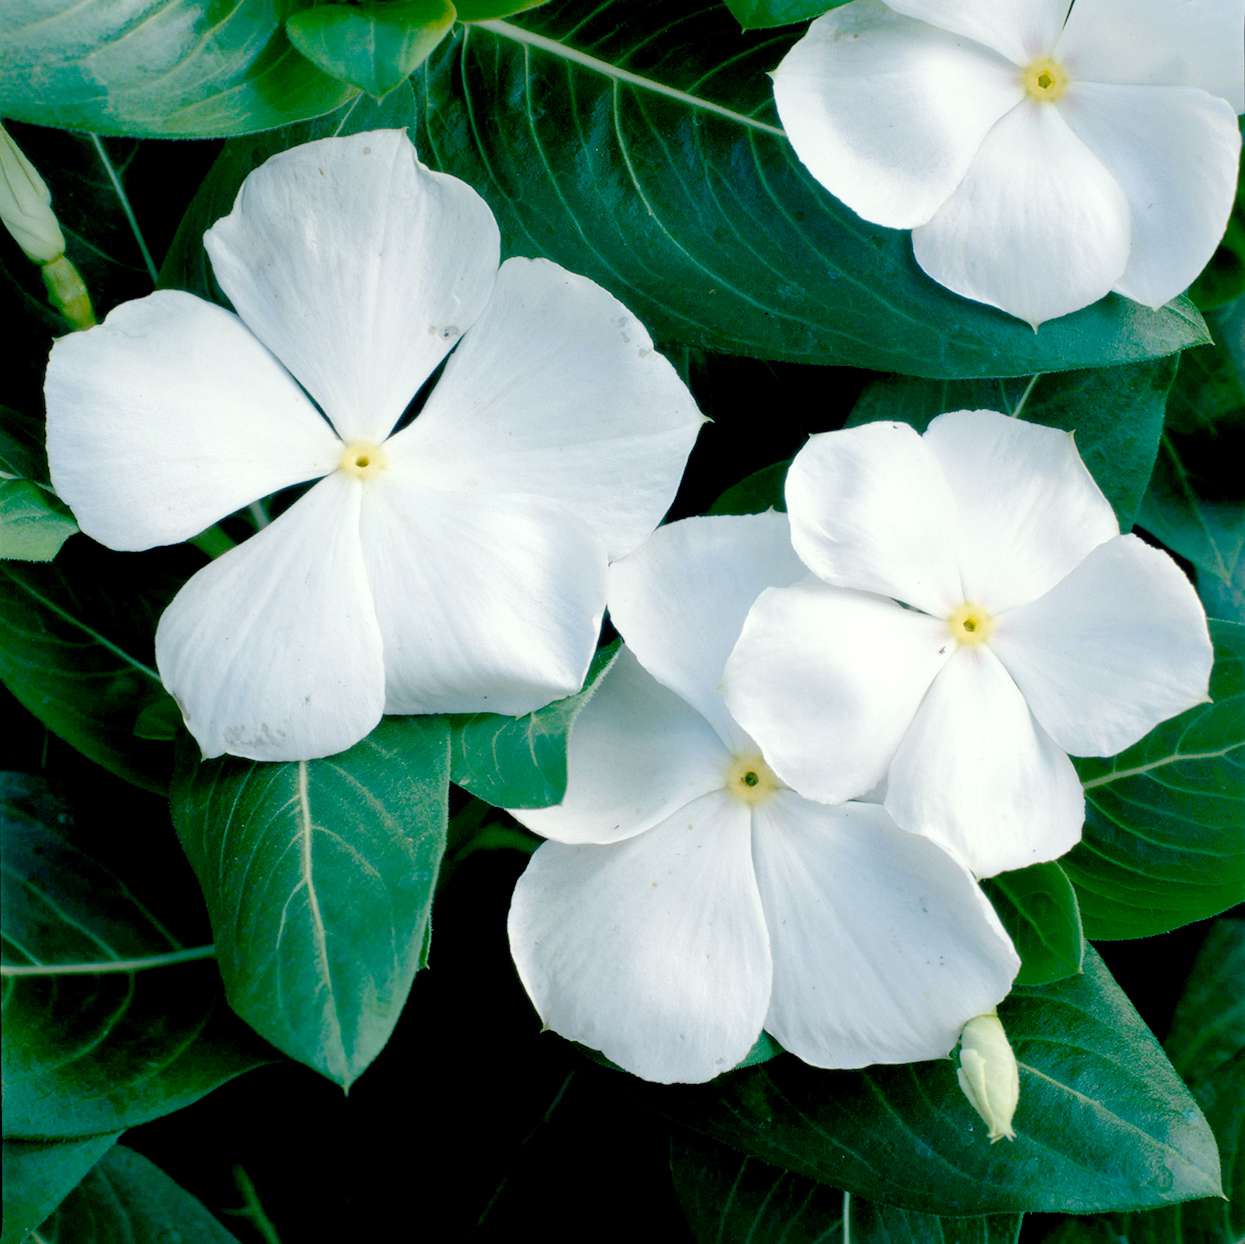 Catharanthus 'Pretty in White' vinca